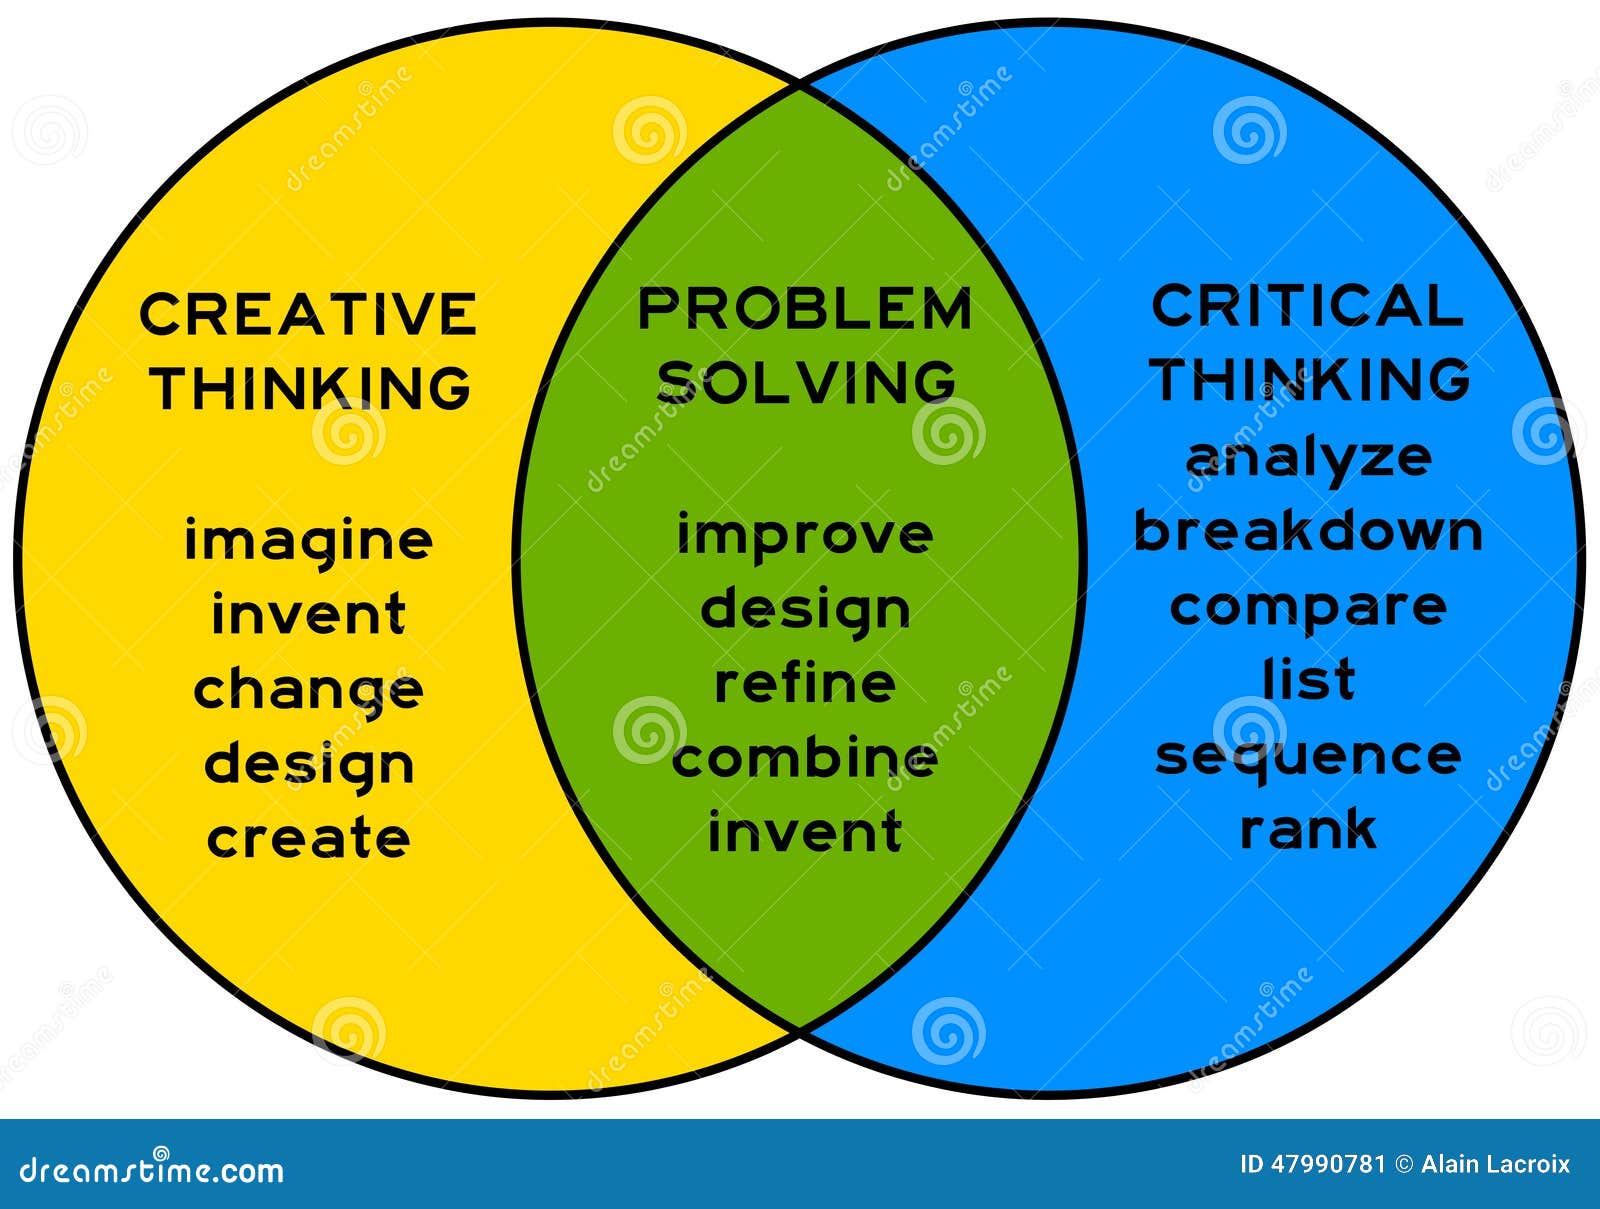 problem solving thinking